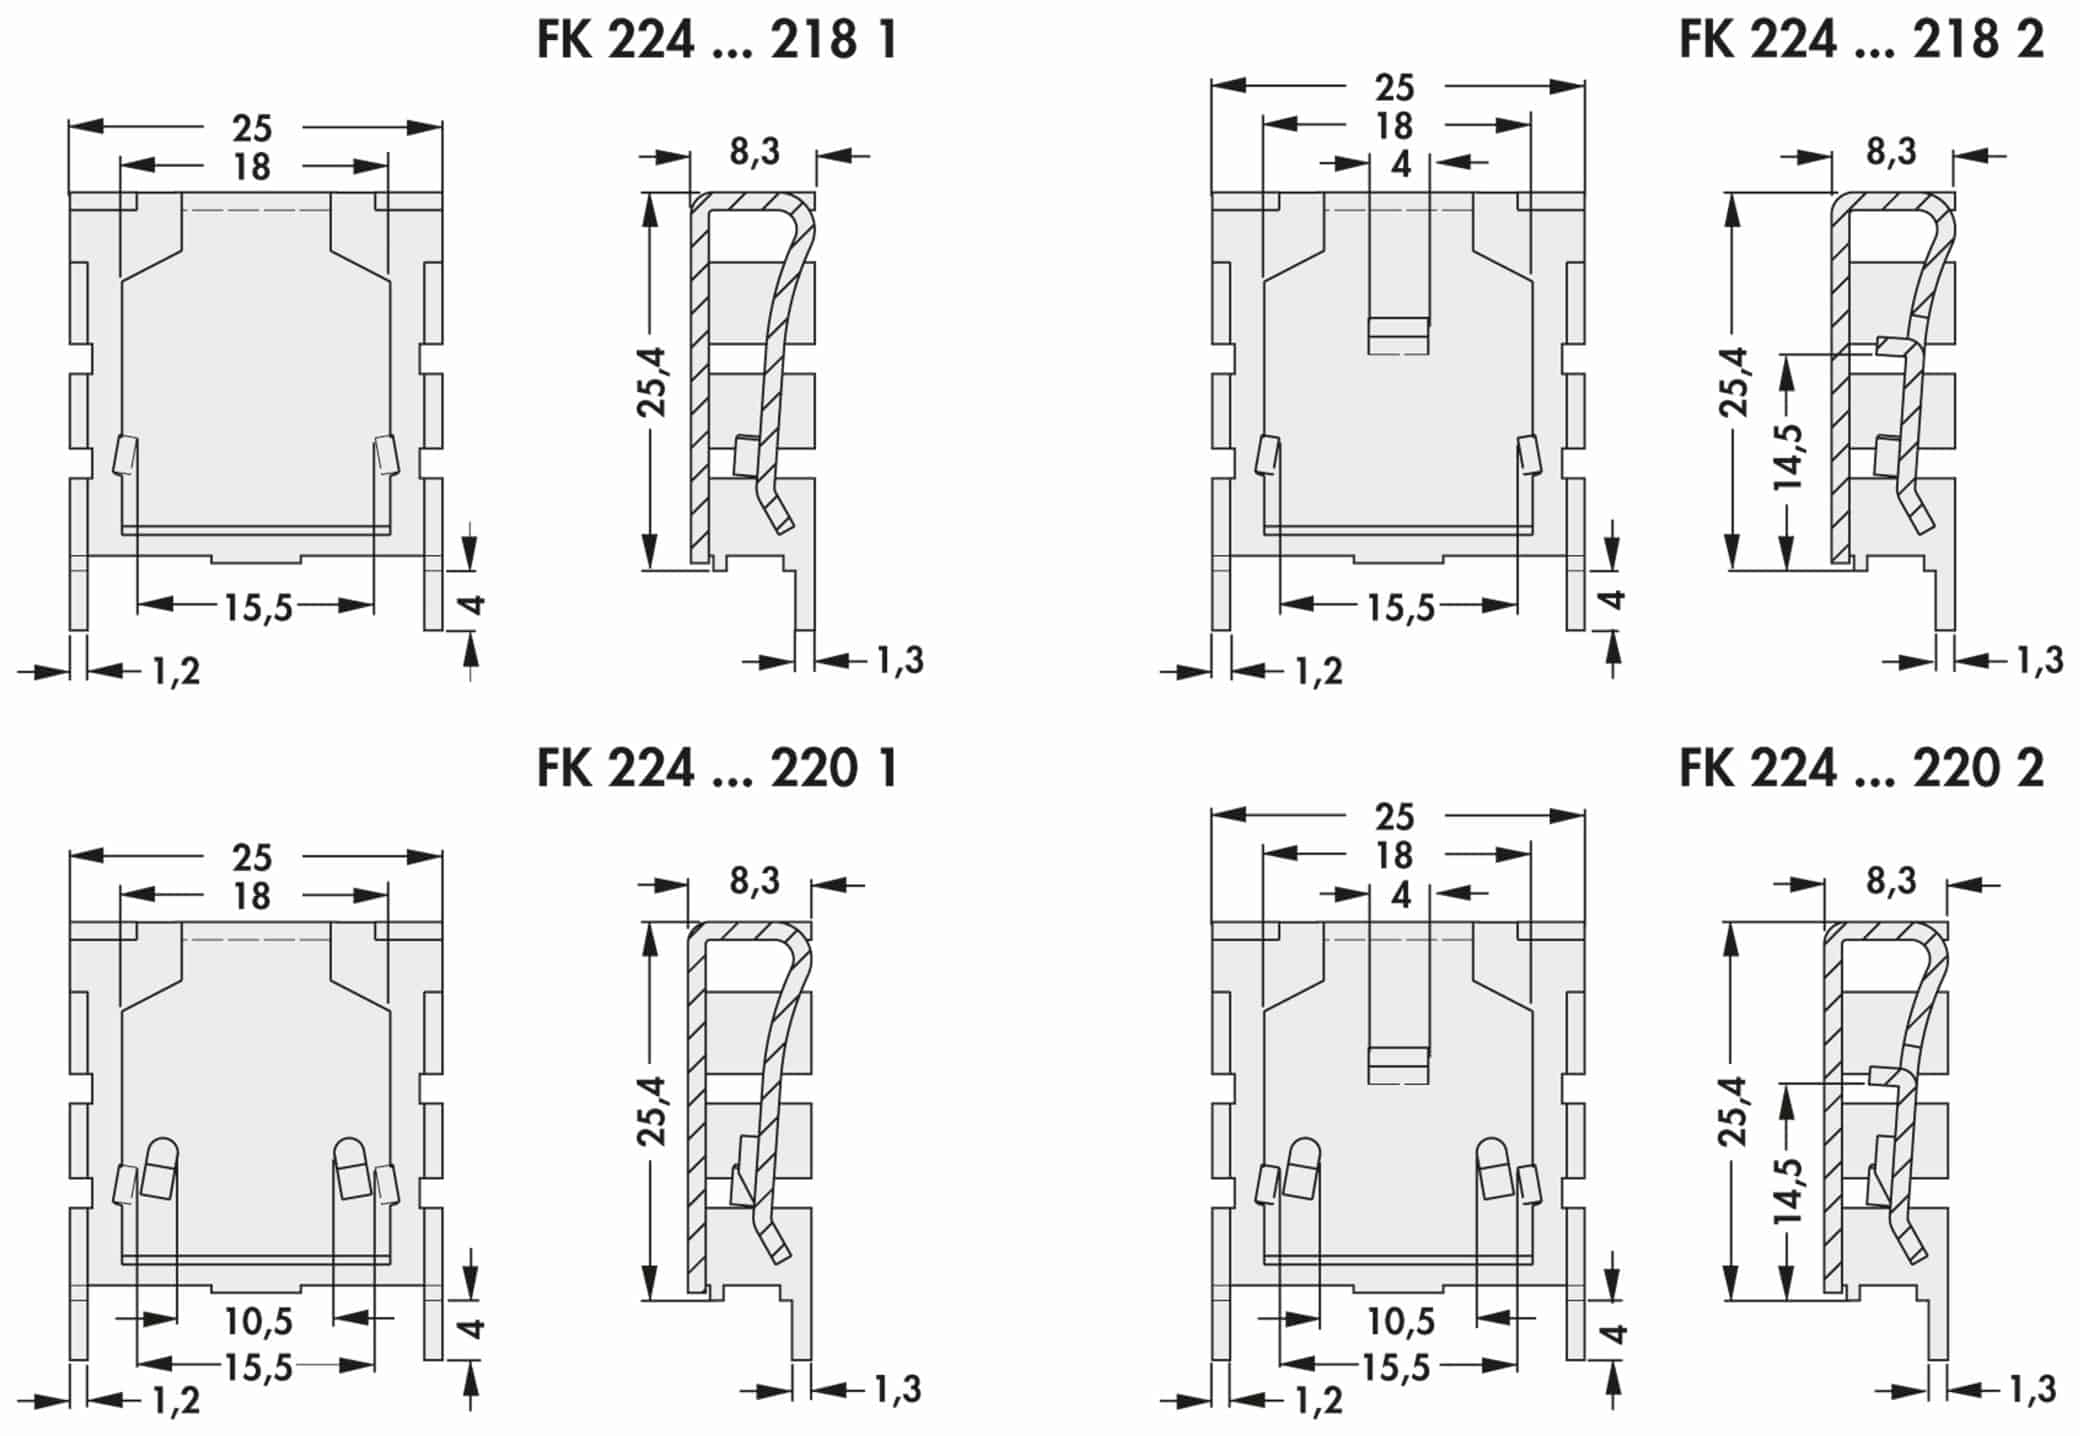 FISCHER ELEKTRONIK Kühlkörper, FK 224 SA 218 1, Fingerkühlkörper, schwarz, Aluminium